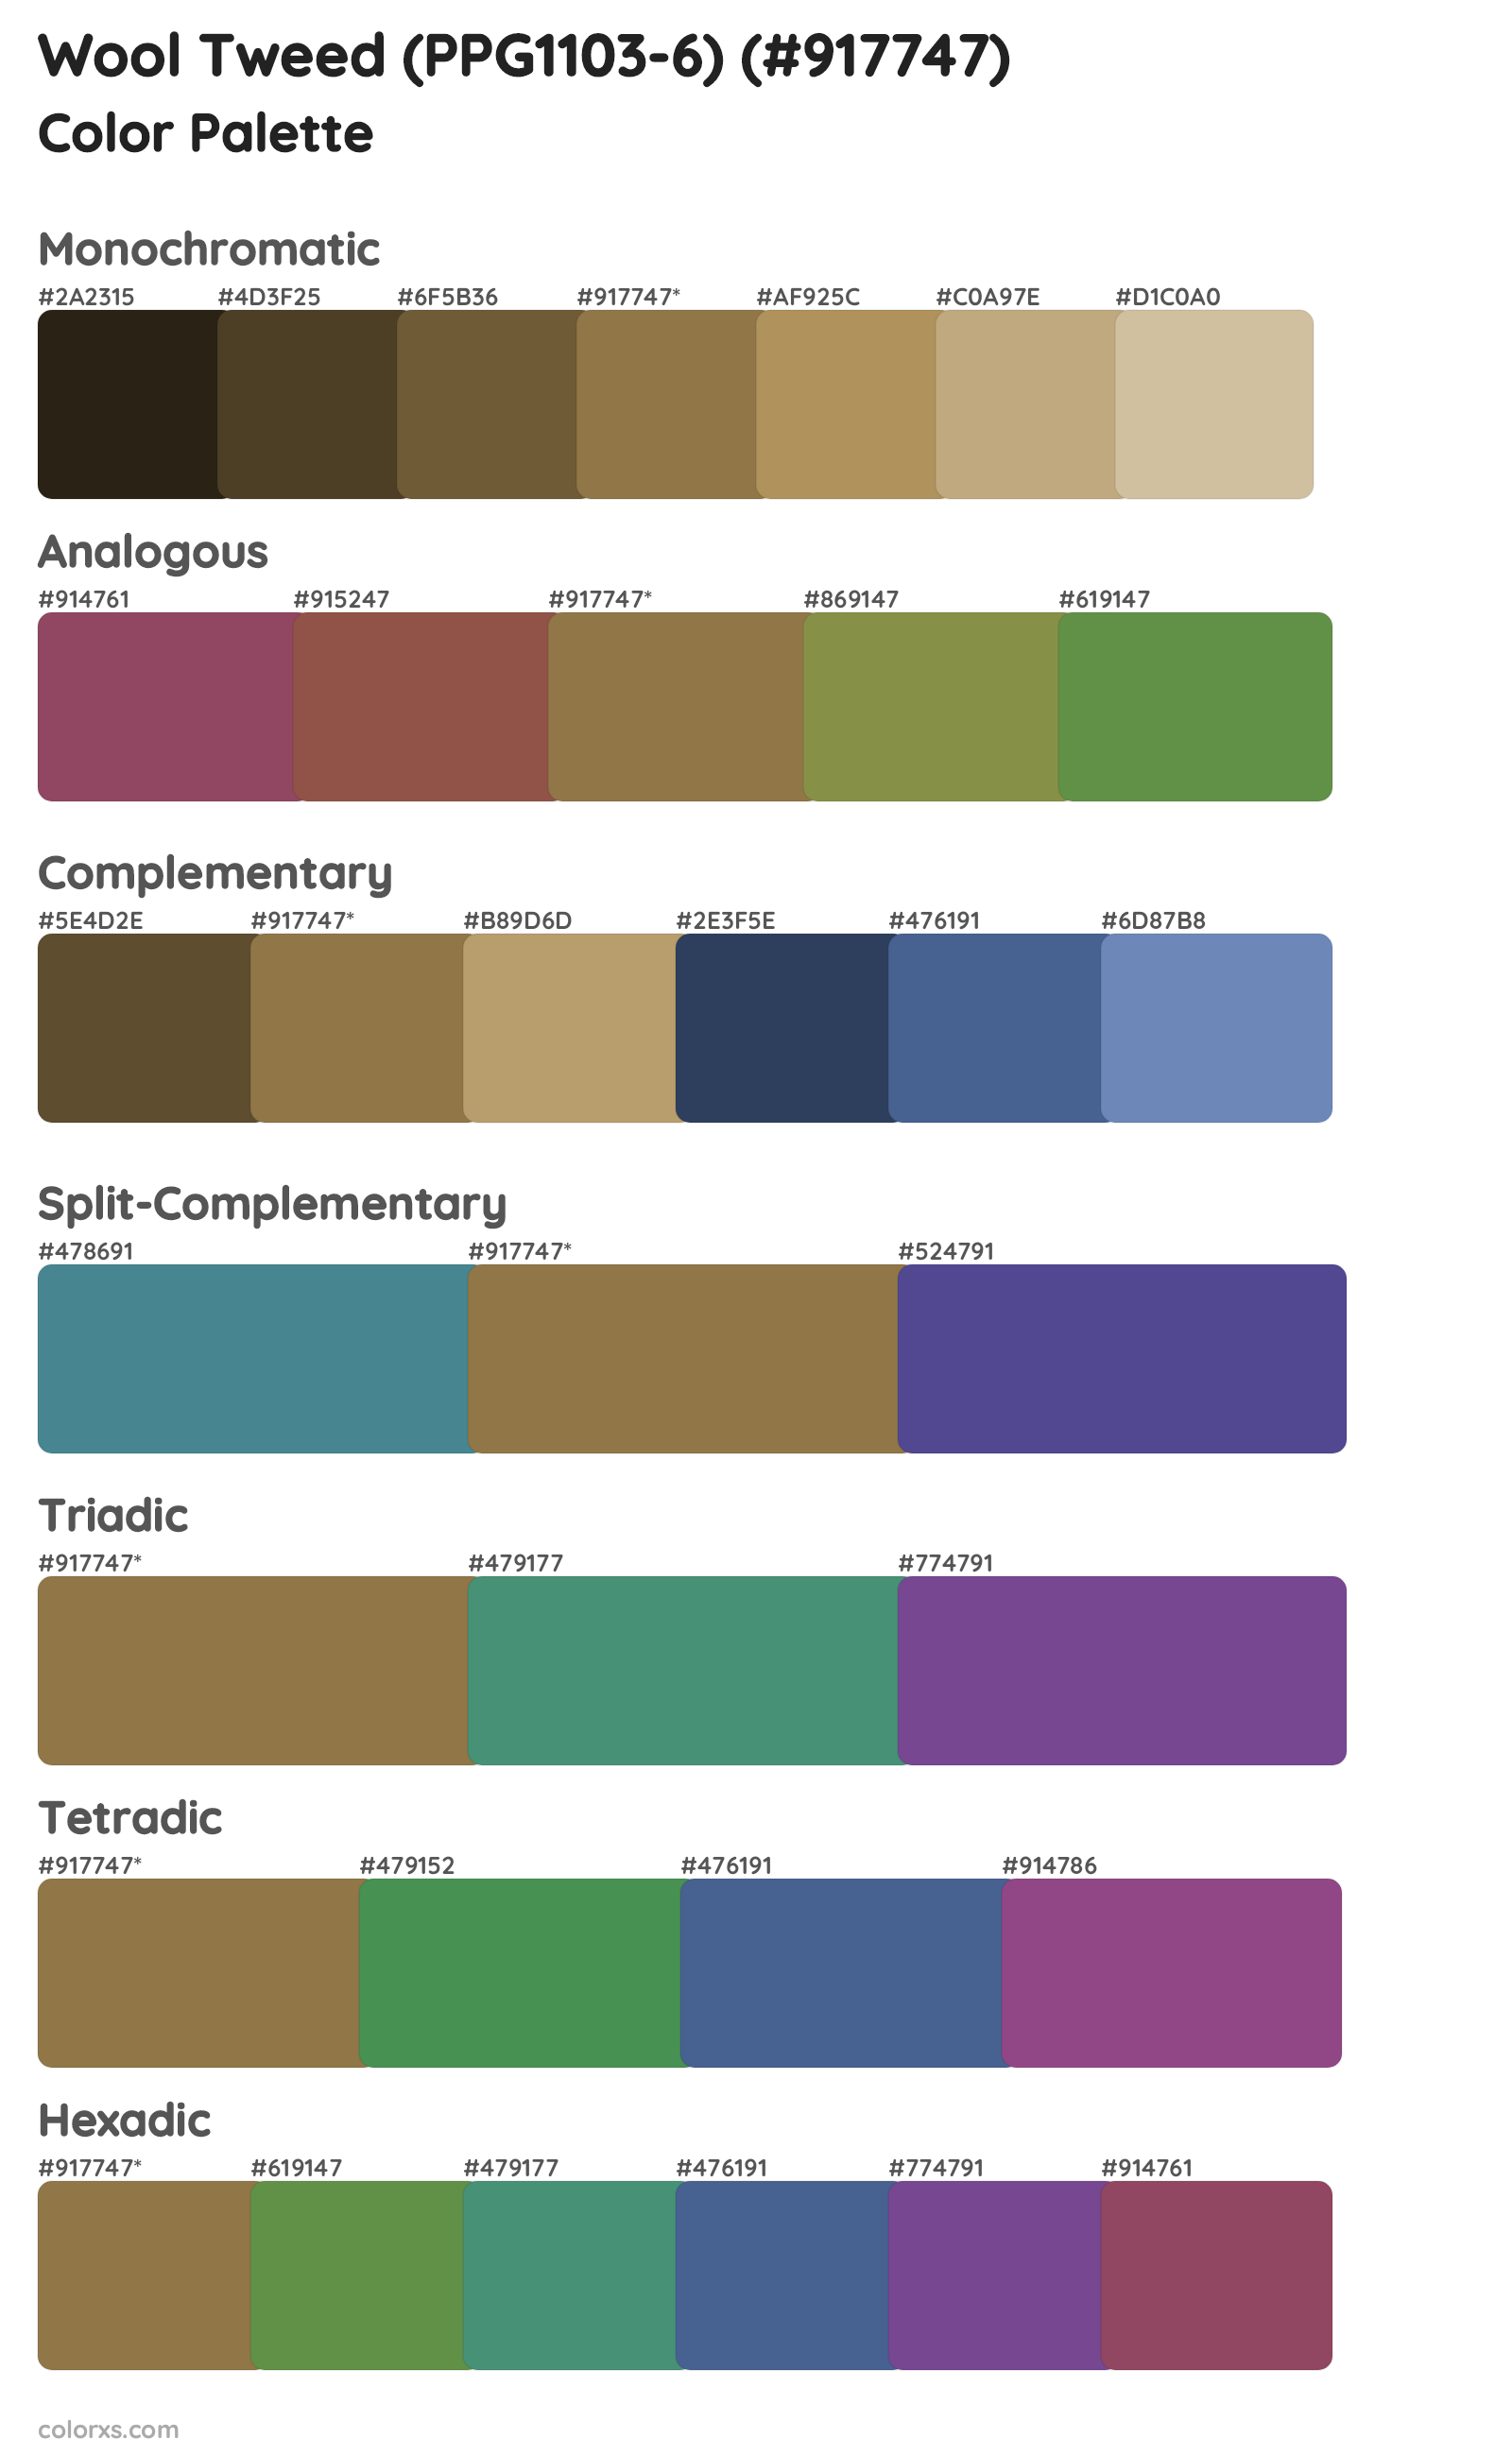 Wool Tweed (PPG1103-6) Color Scheme Palettes